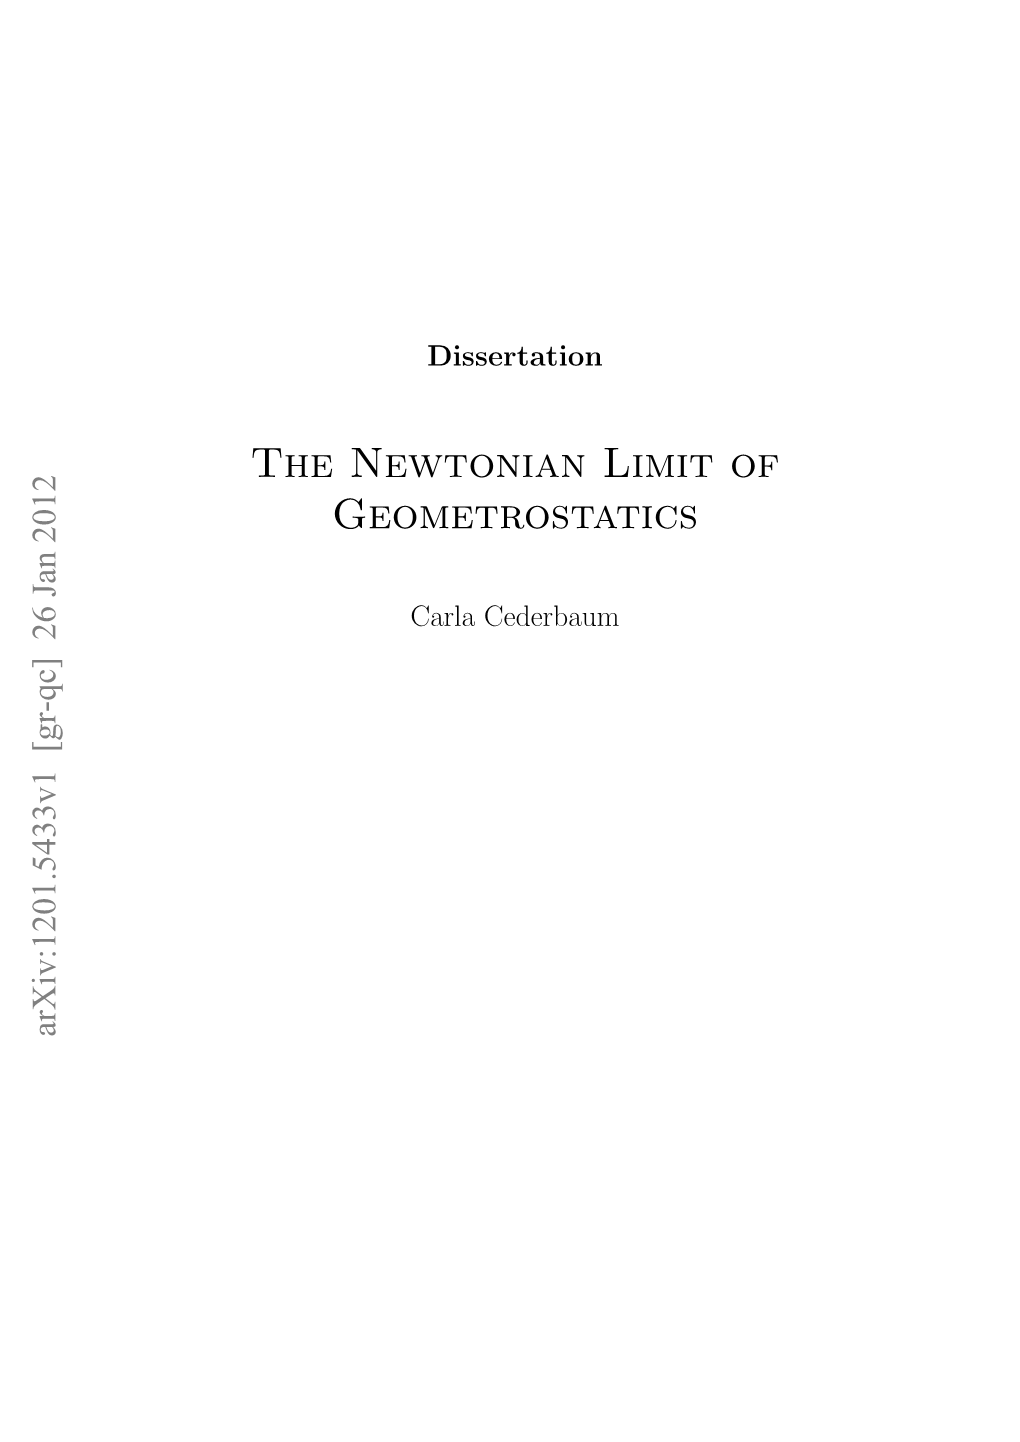 The Newtonian Limit of Geometrostatics